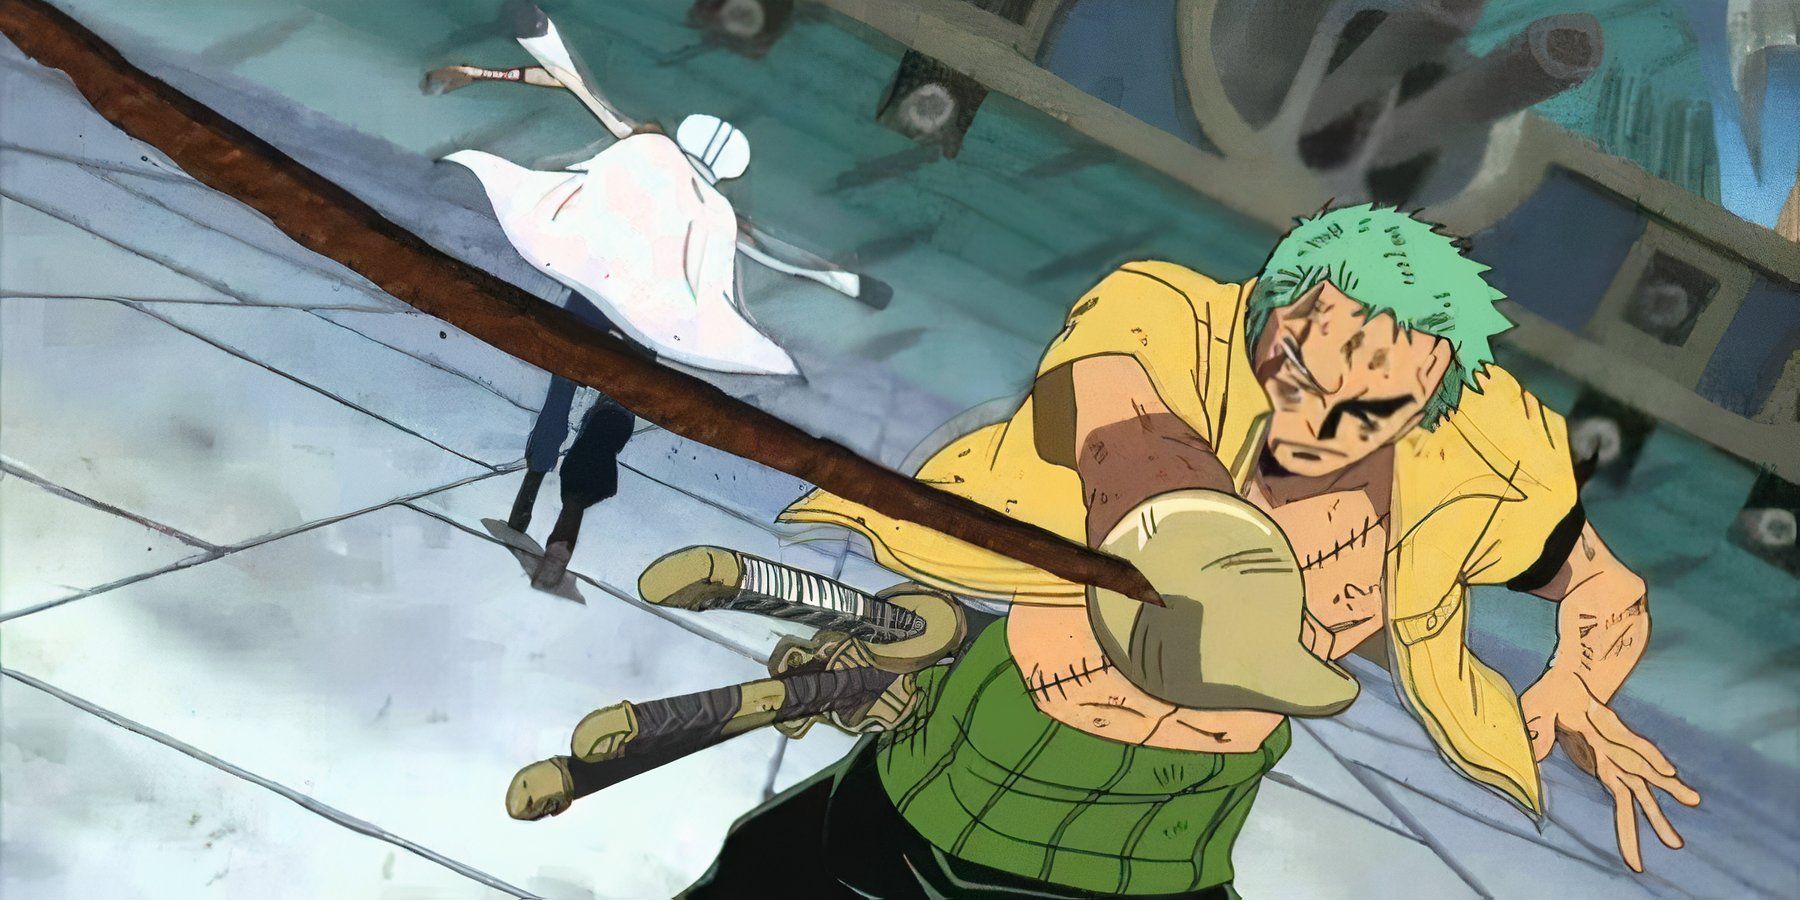 Captain Sgu destroys Zoro's Fruit with the Rust-Rust Fruit in One Piece.